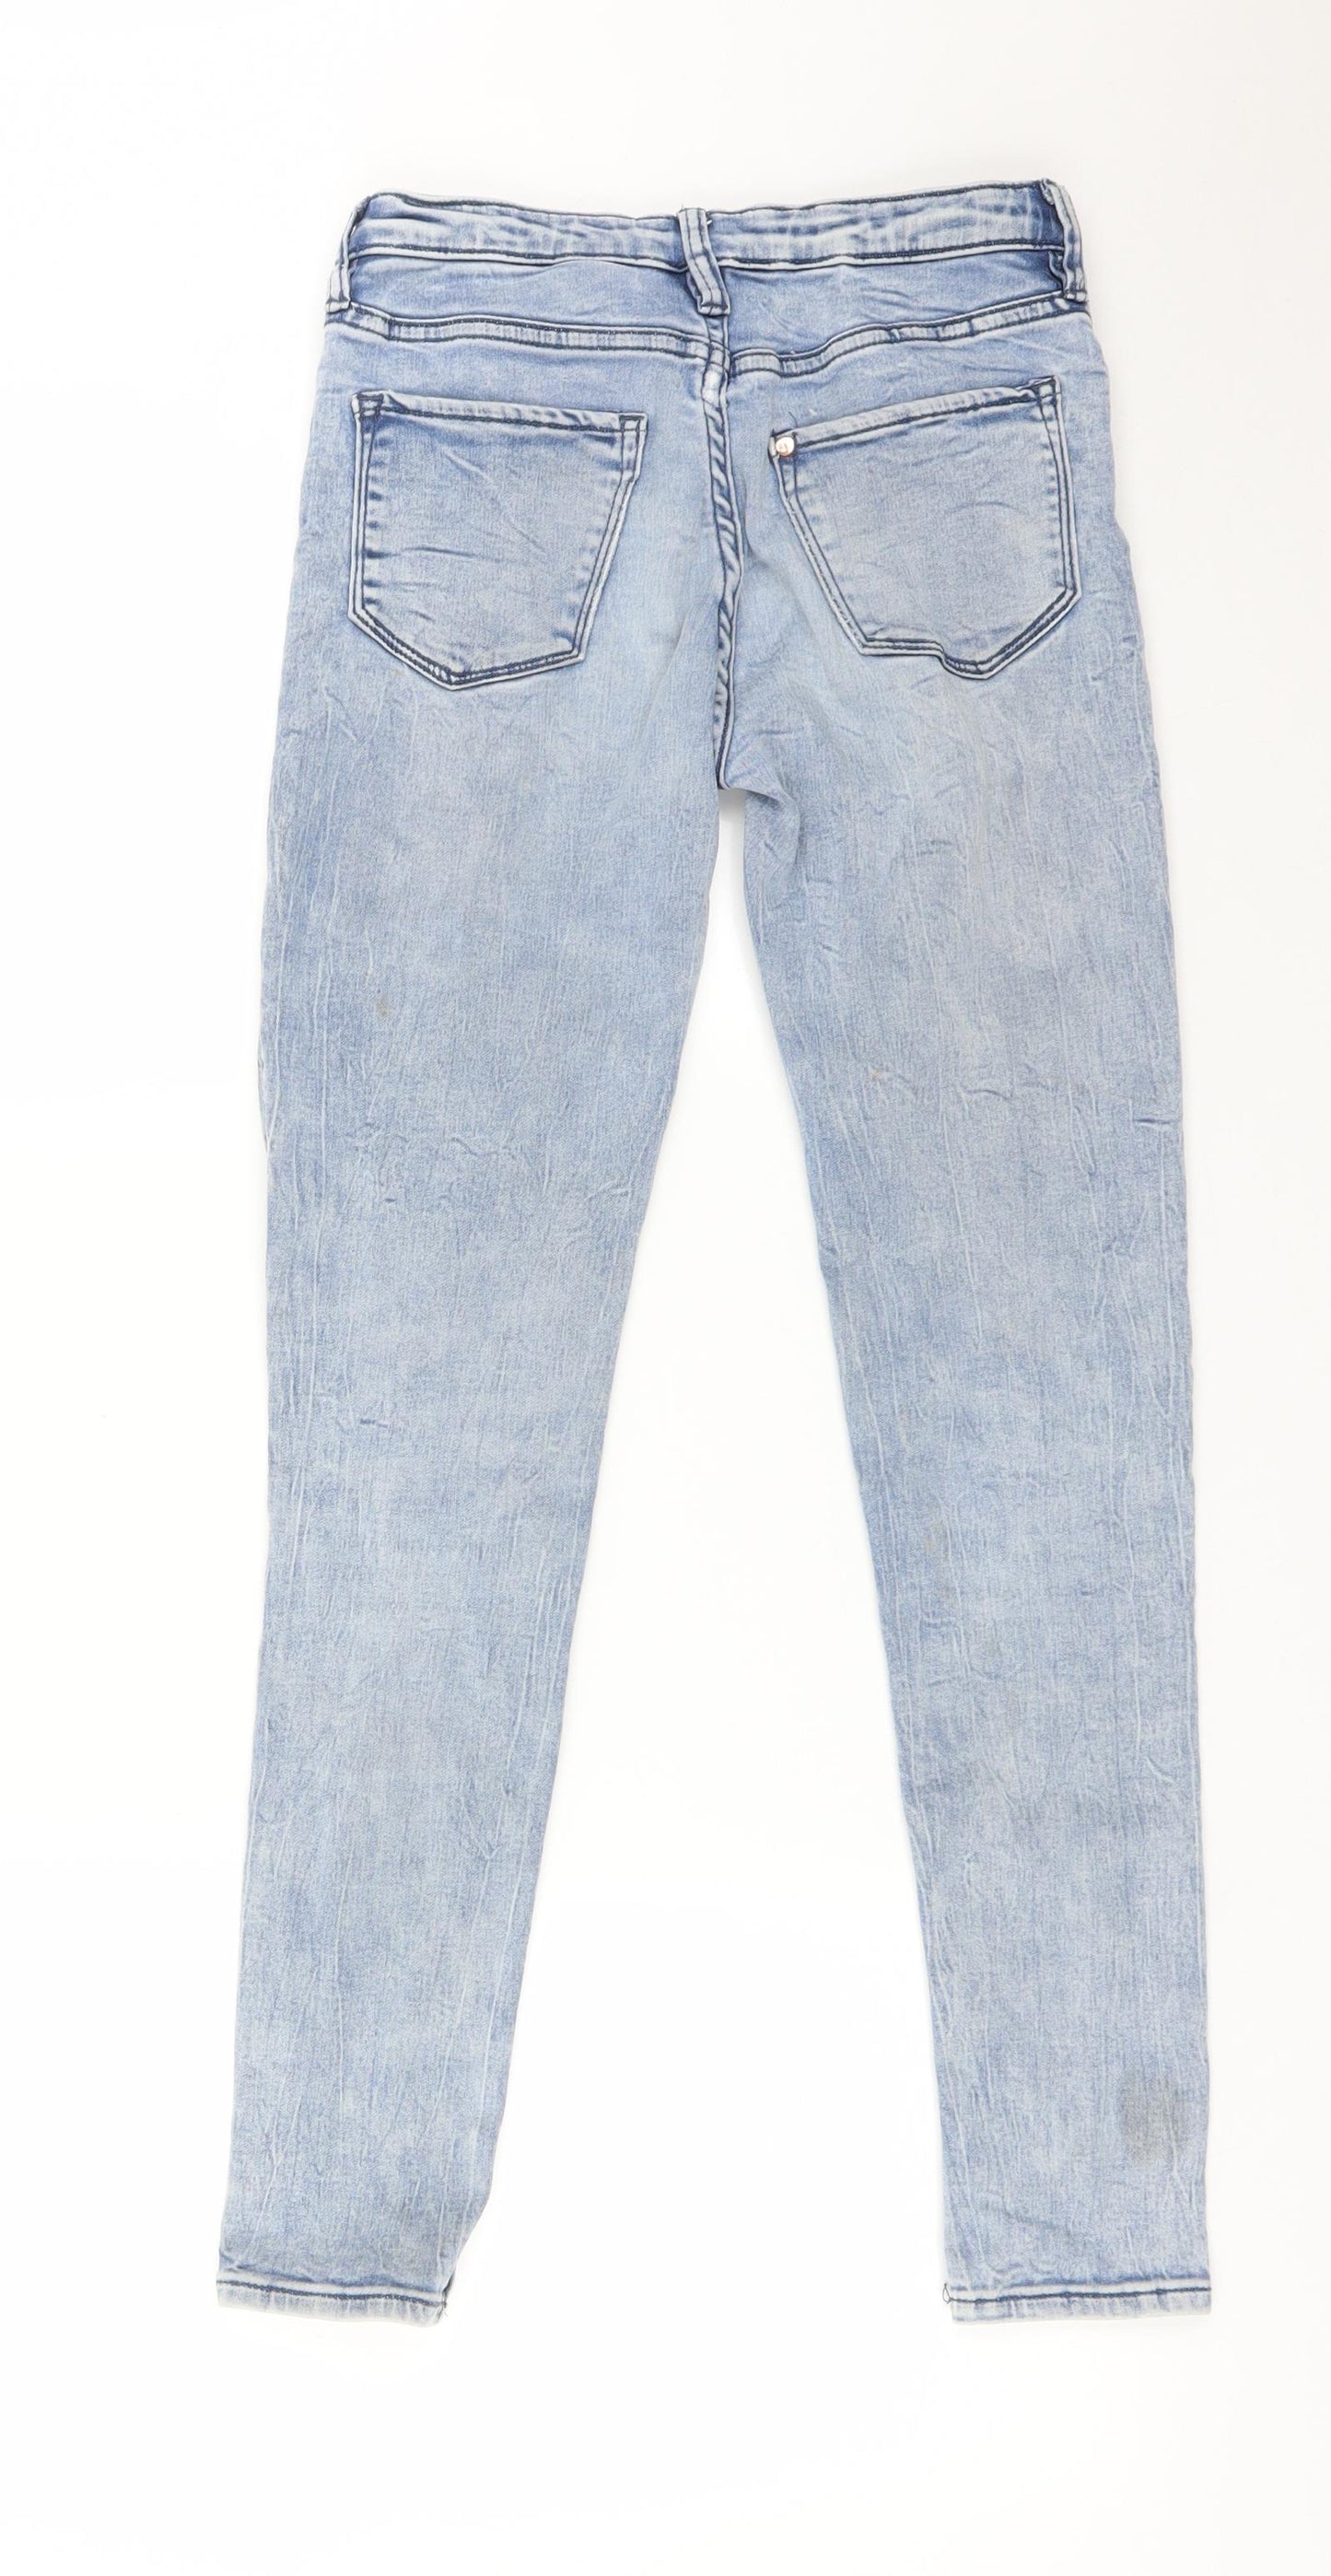 H&M Girls Blue  Lyocell Skinny Jeans Size 11 Years  Regular